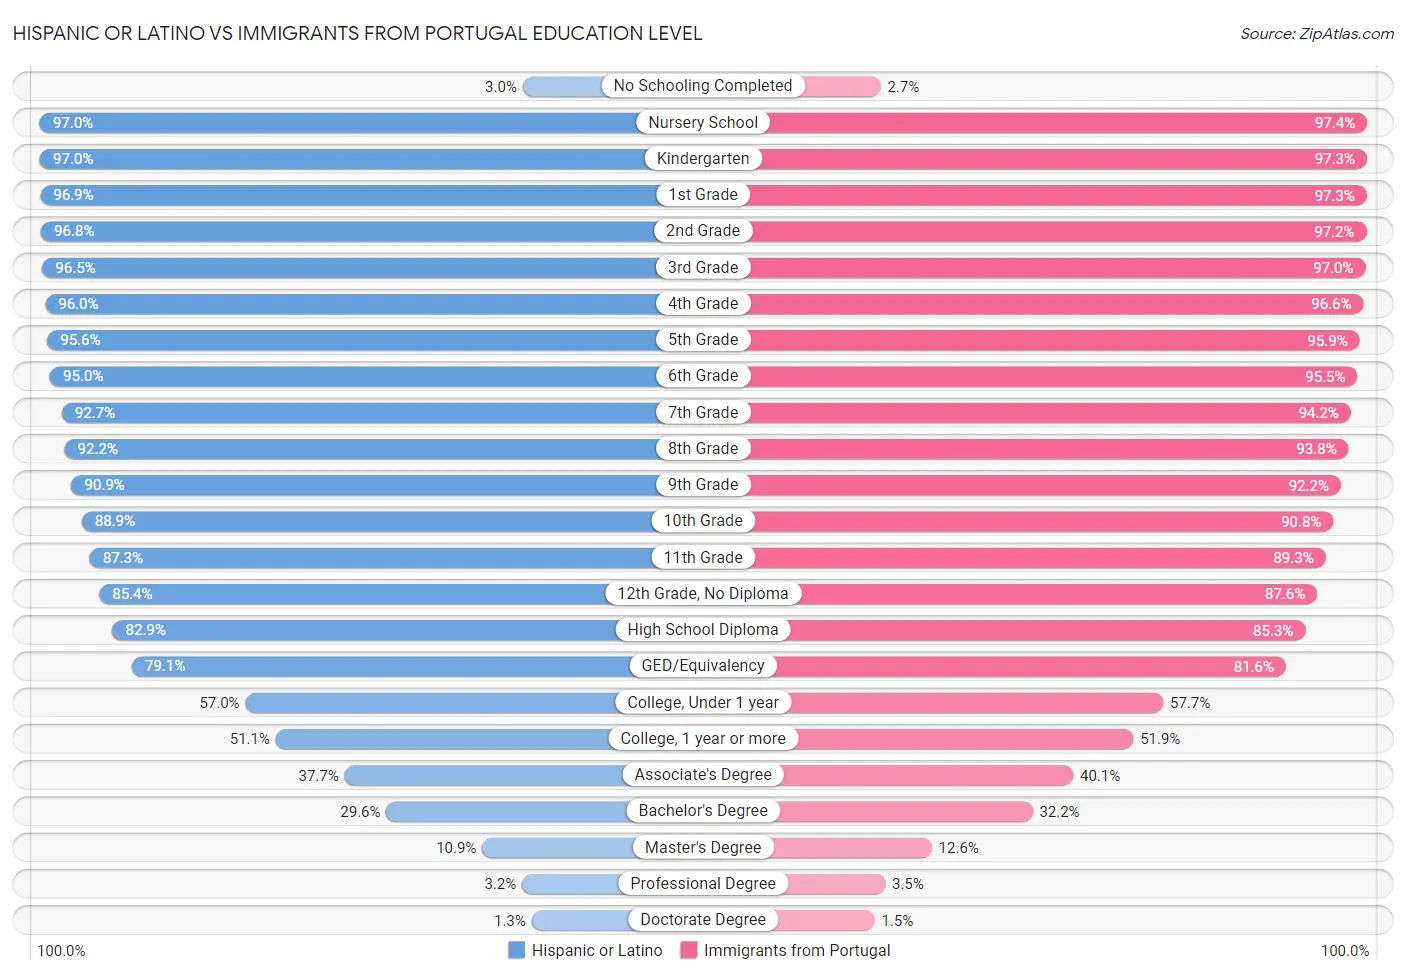 Hispanic or Latino vs Immigrants from Portugal Education Level